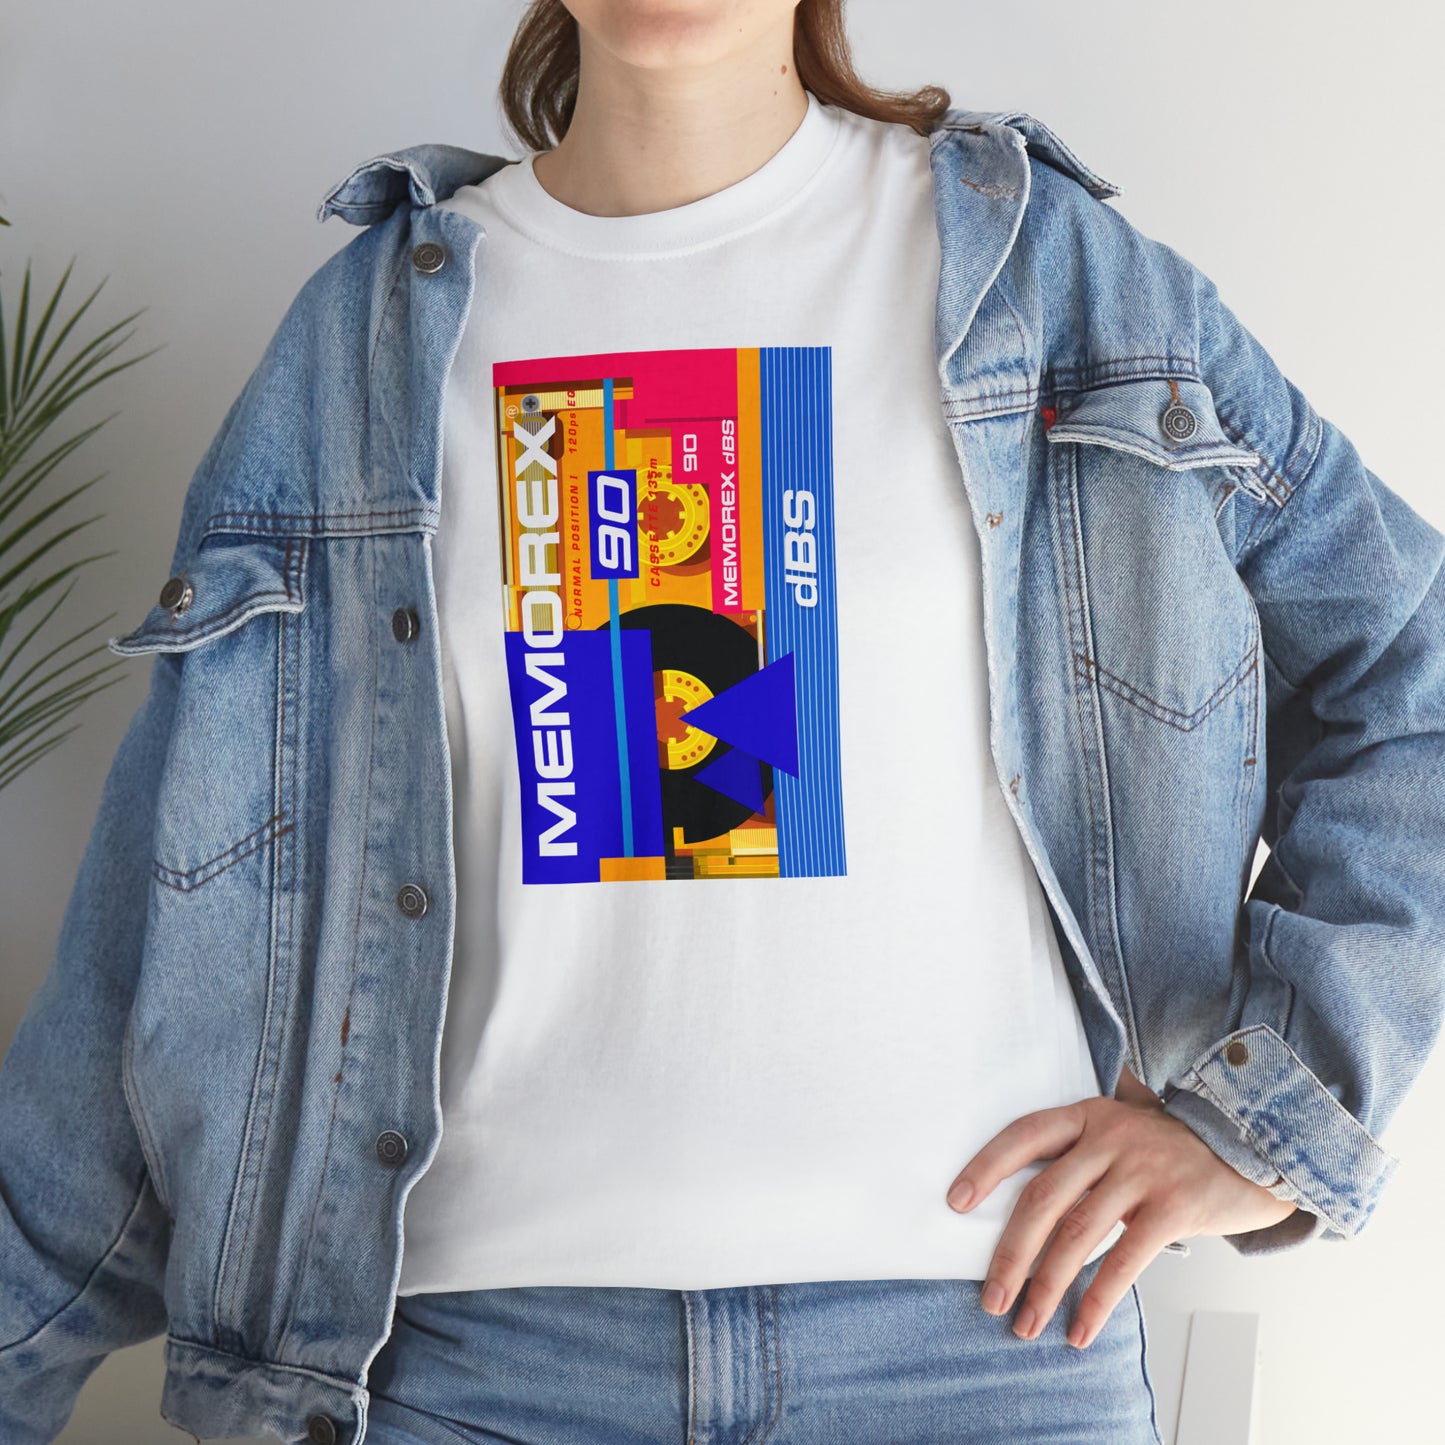 Memorex Tape T-Shirt